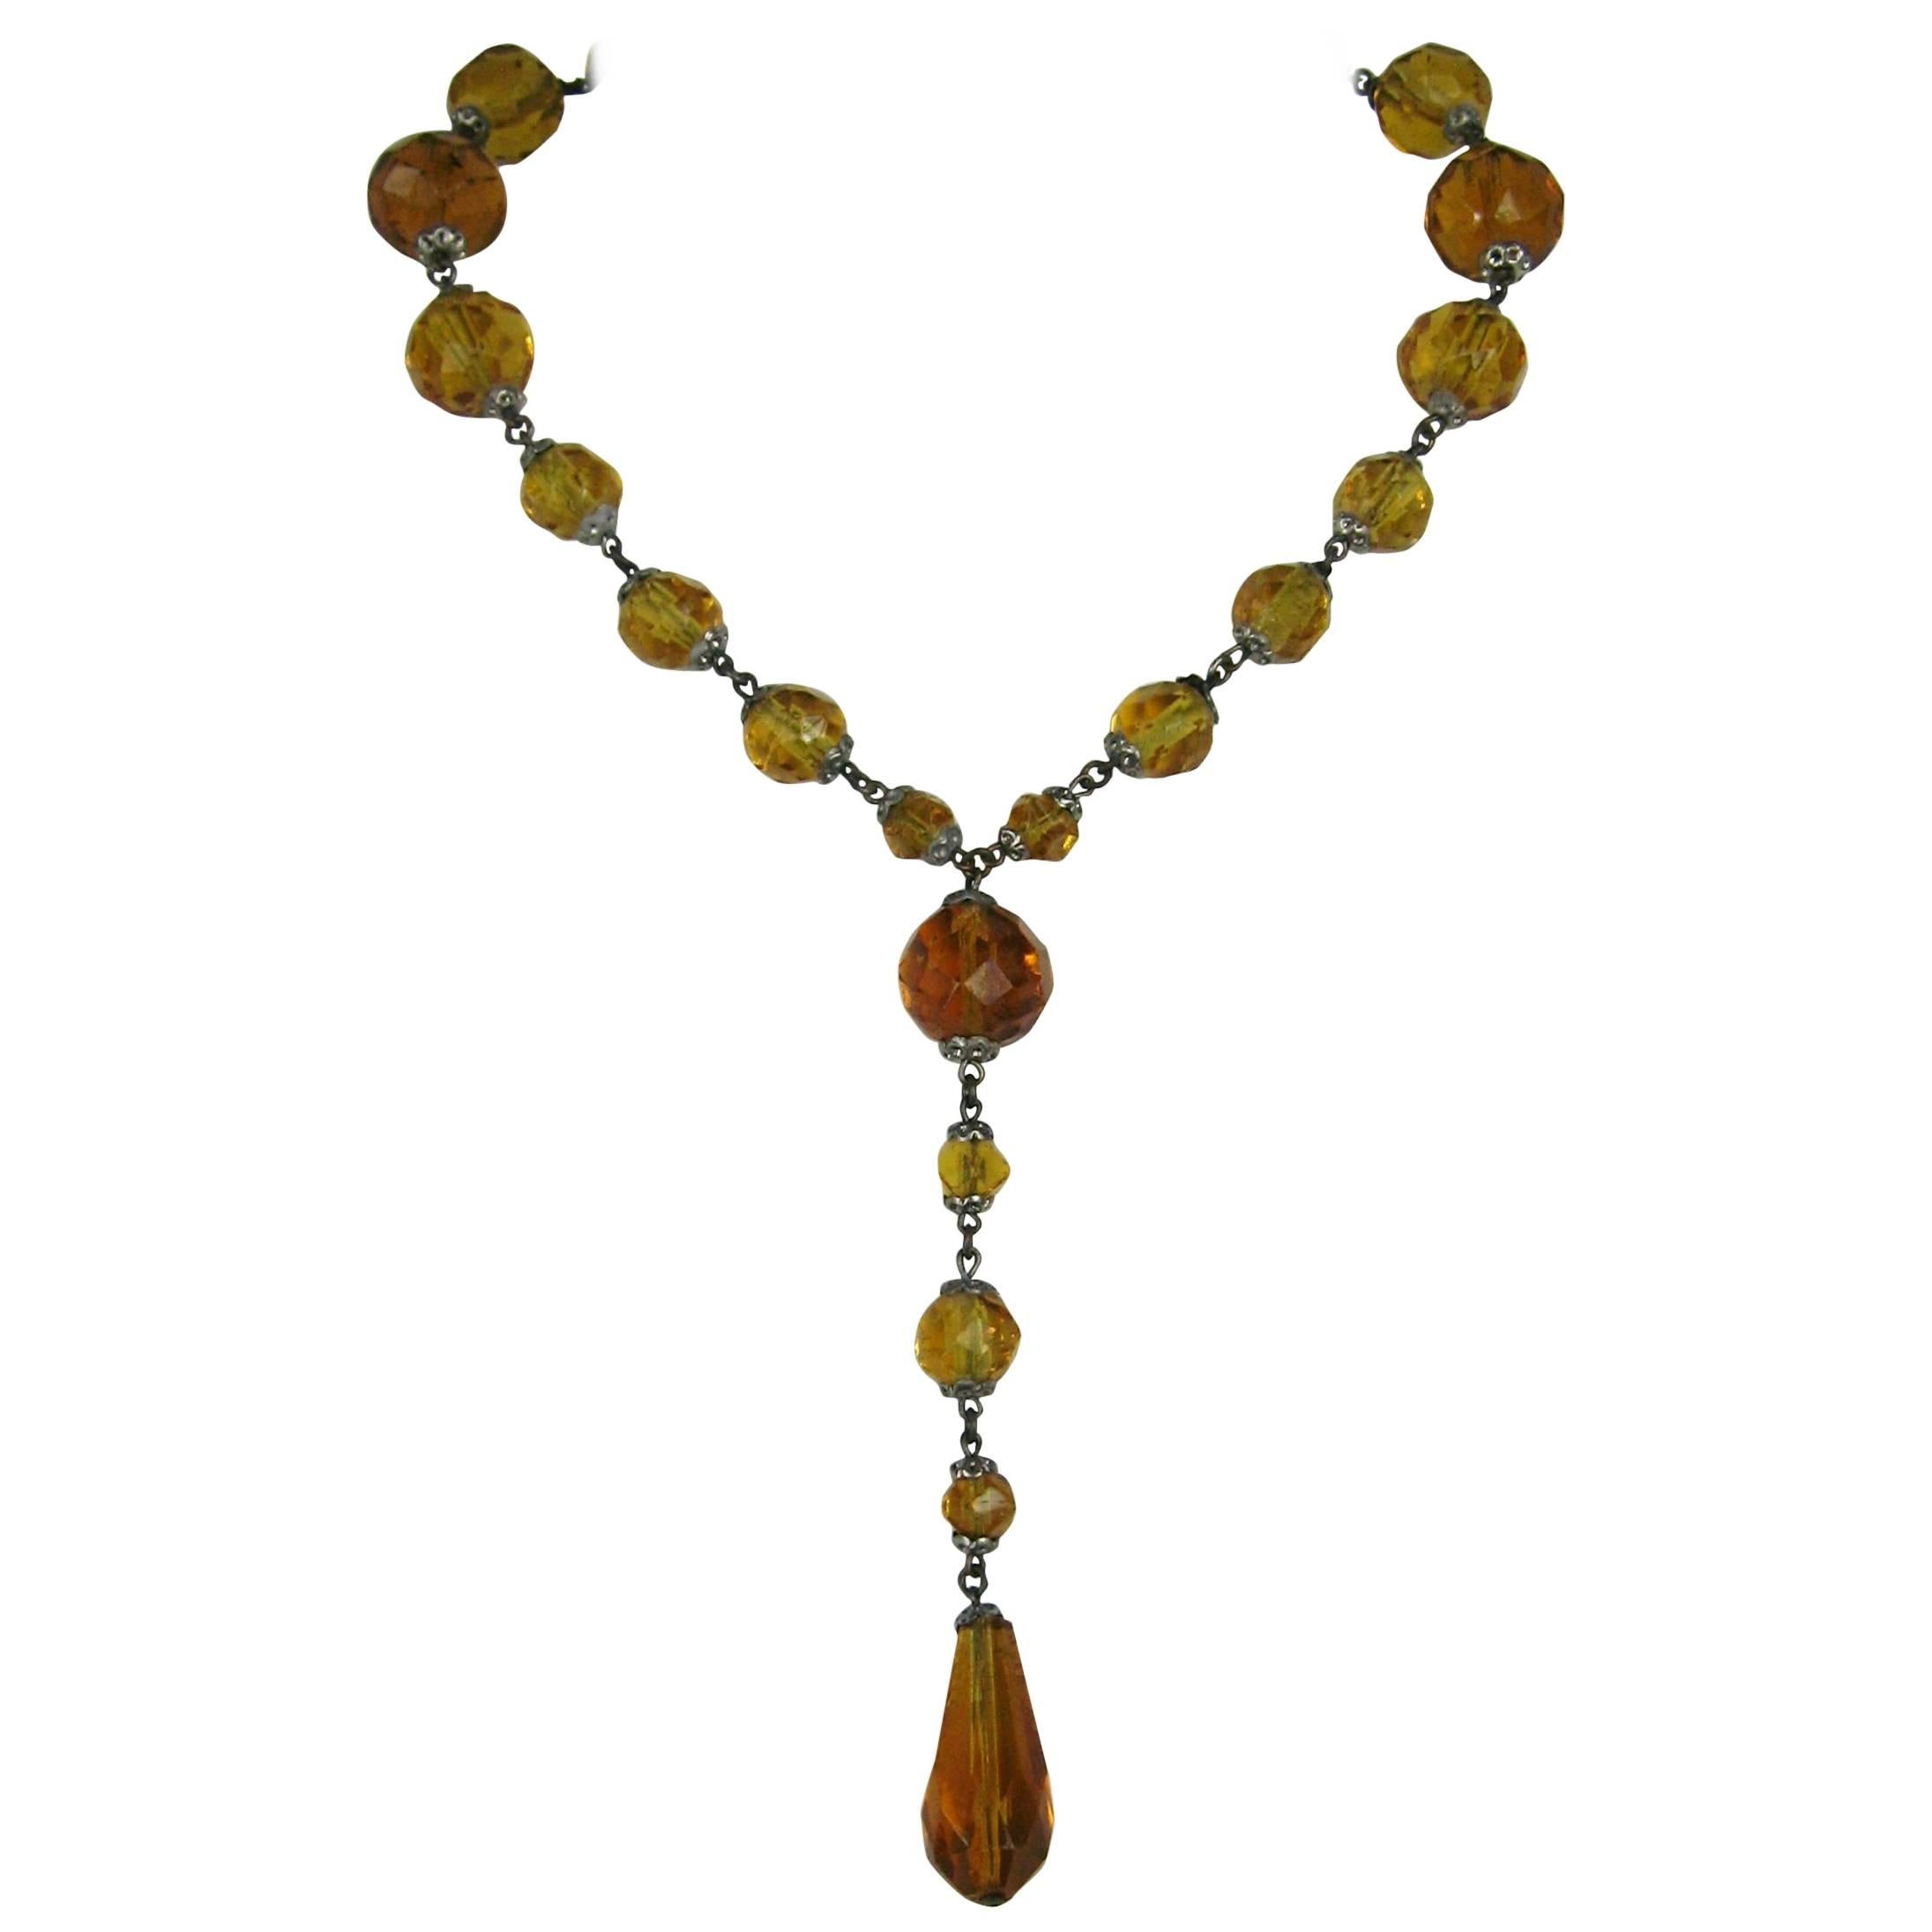 Art Deco Amber Glass Sautoir Necklace 1920s